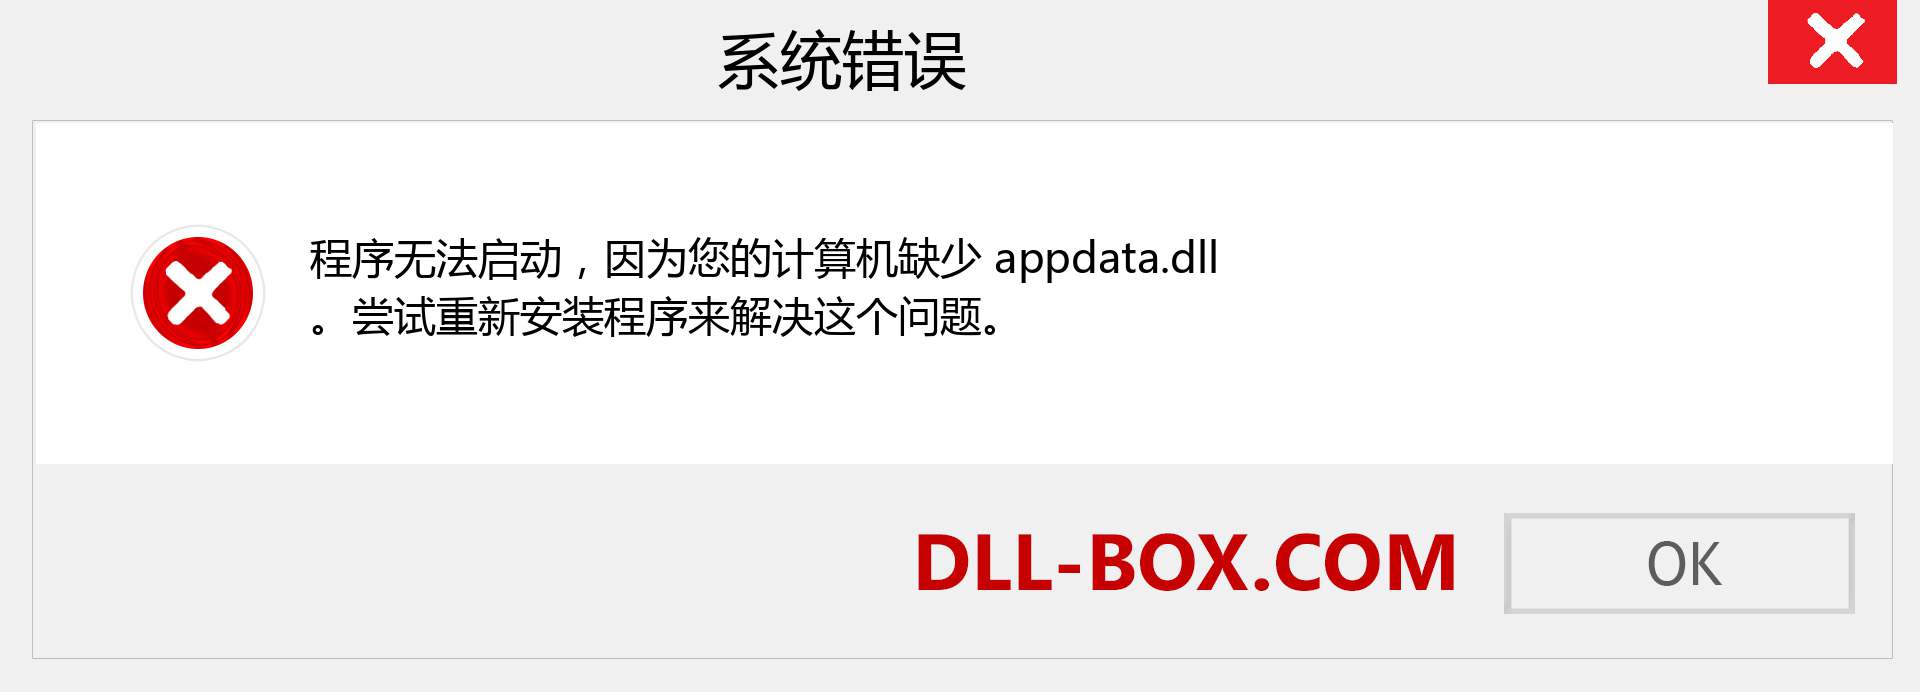 appdata.dll 文件丢失？。 适用于 Windows 7、8、10 的下载 - 修复 Windows、照片、图像上的 appdata dll 丢失错误